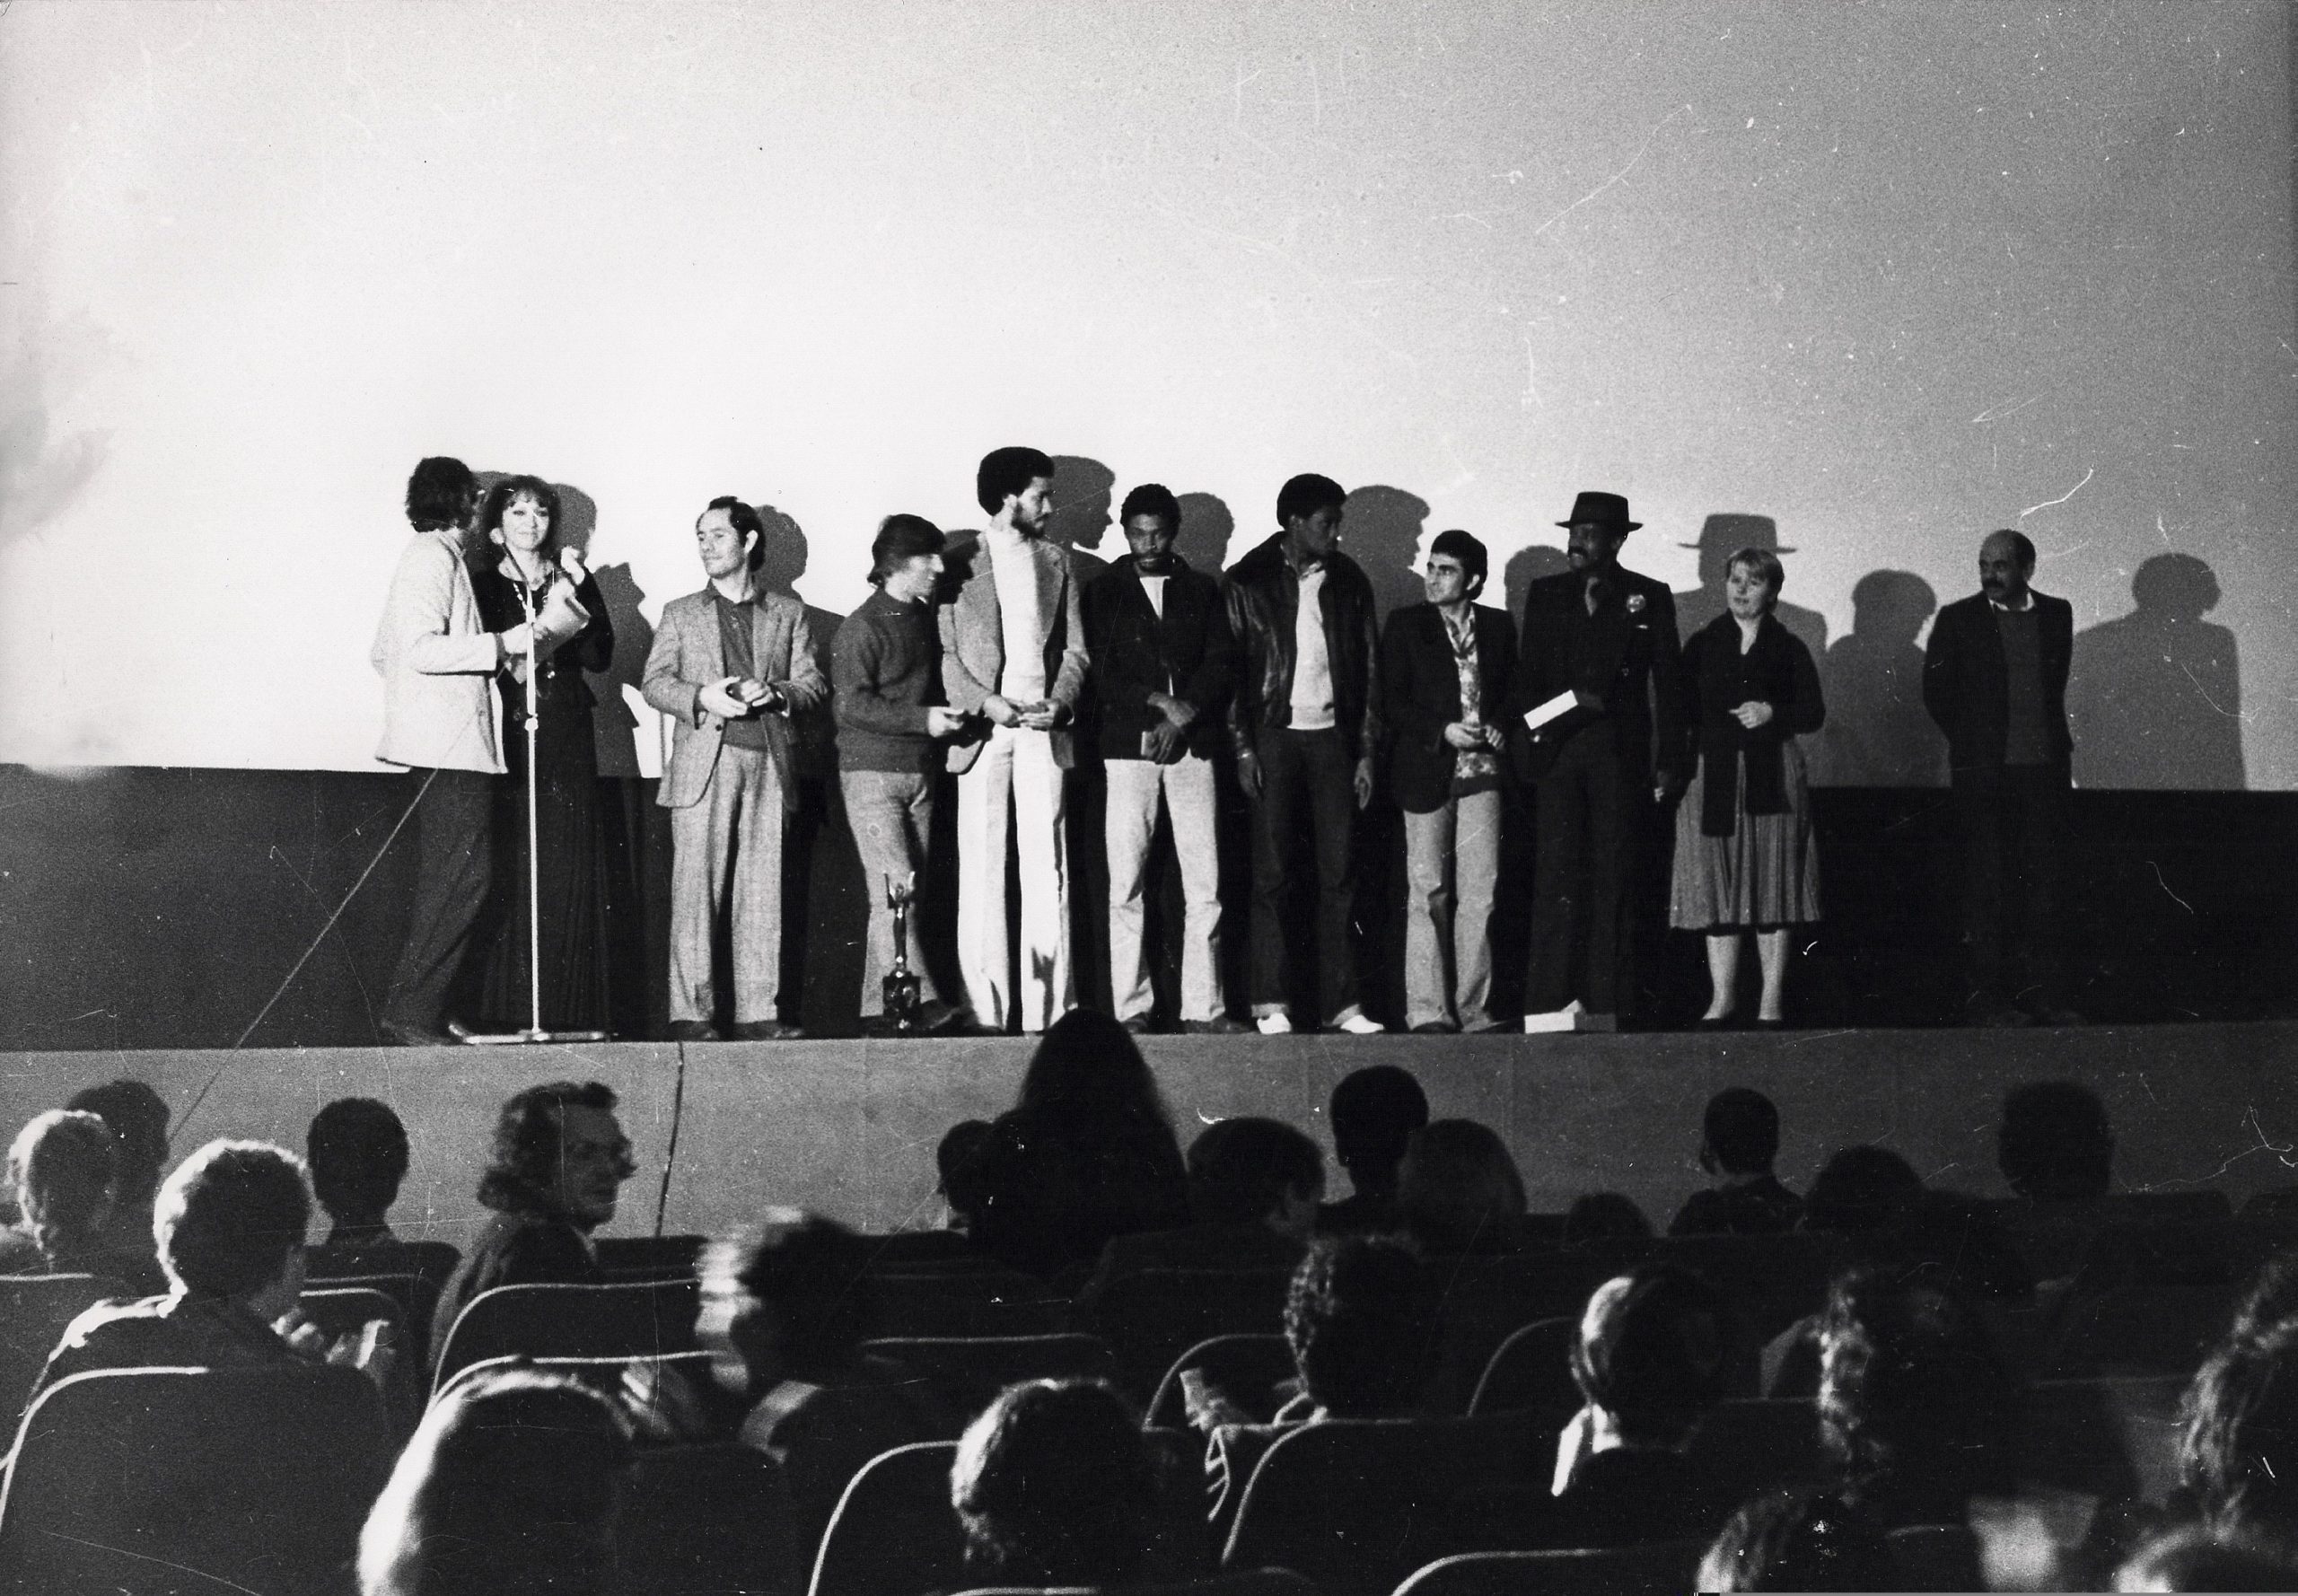 1979 - Cinéma afro-américain